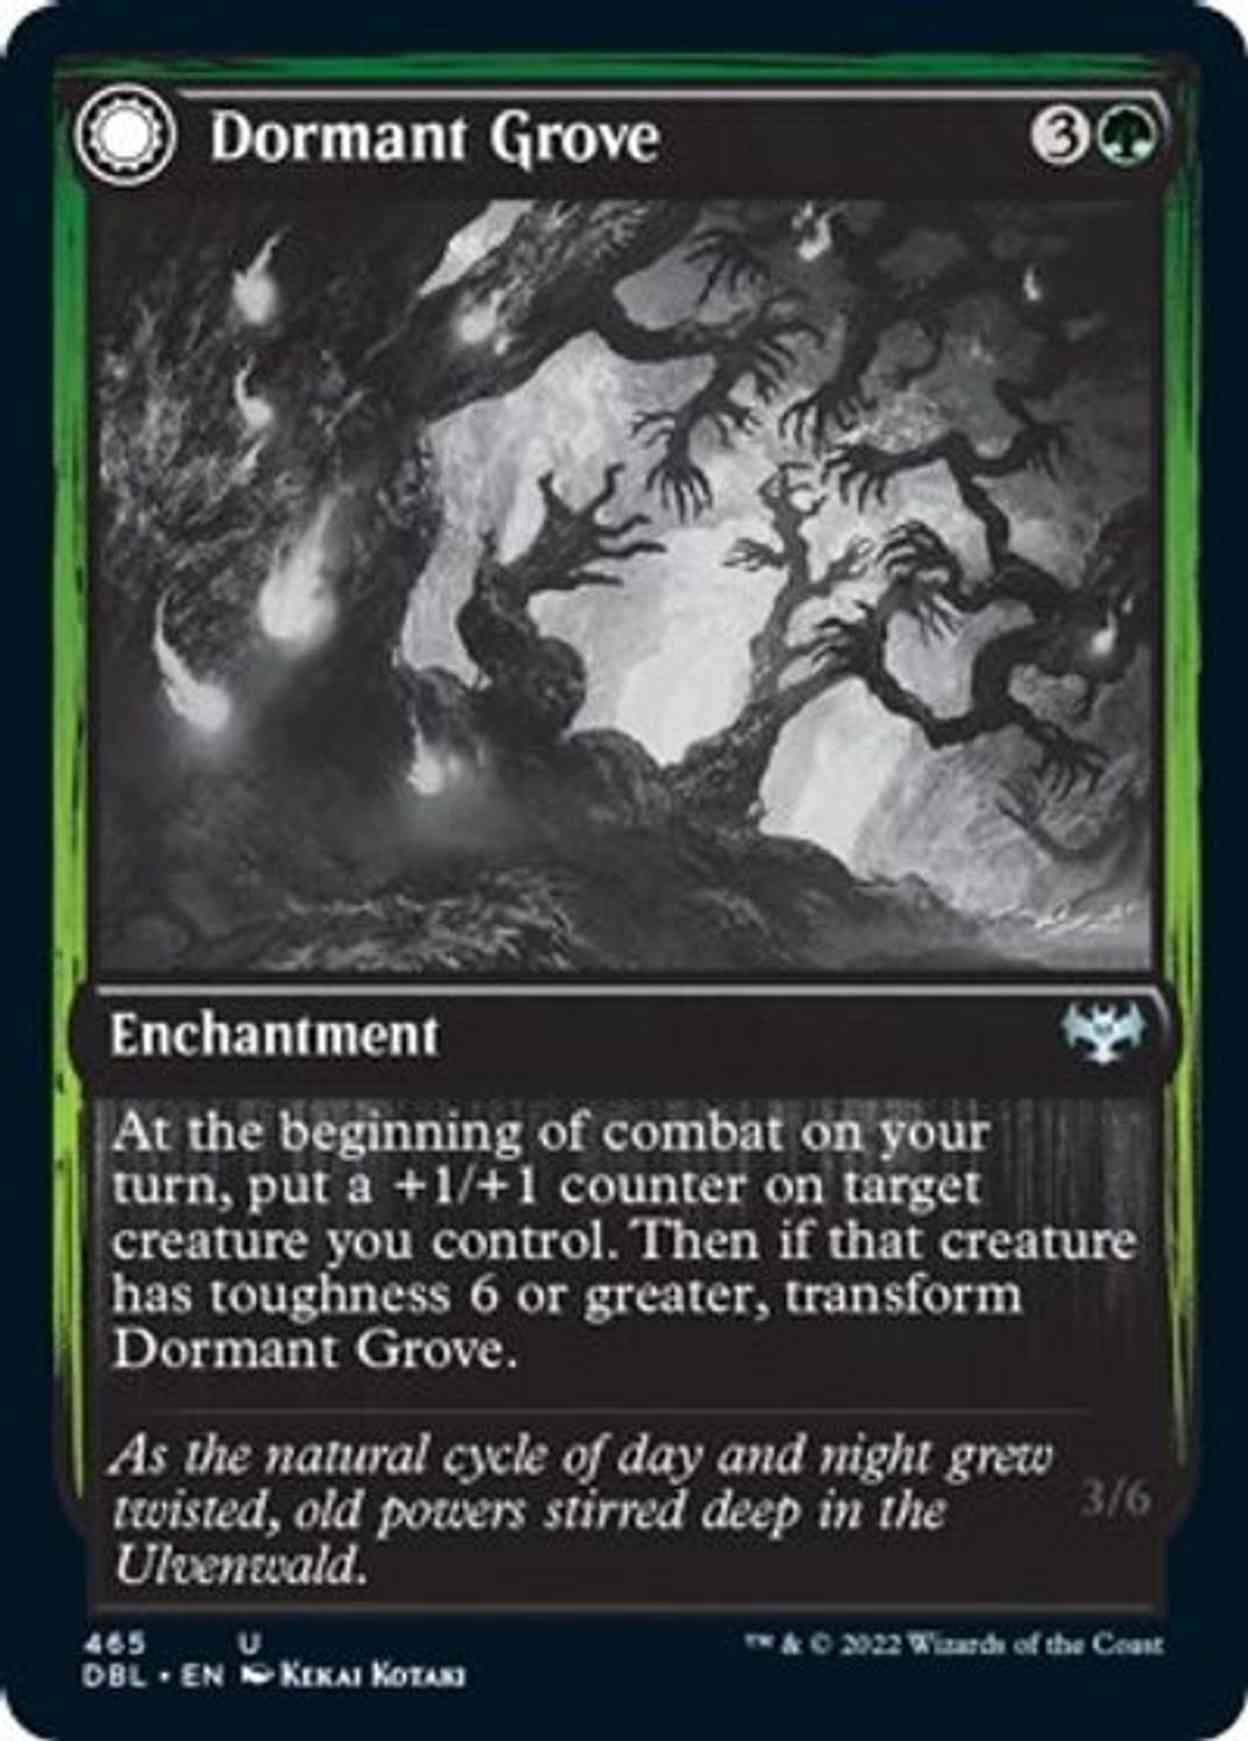 Dormant Grove magic card front